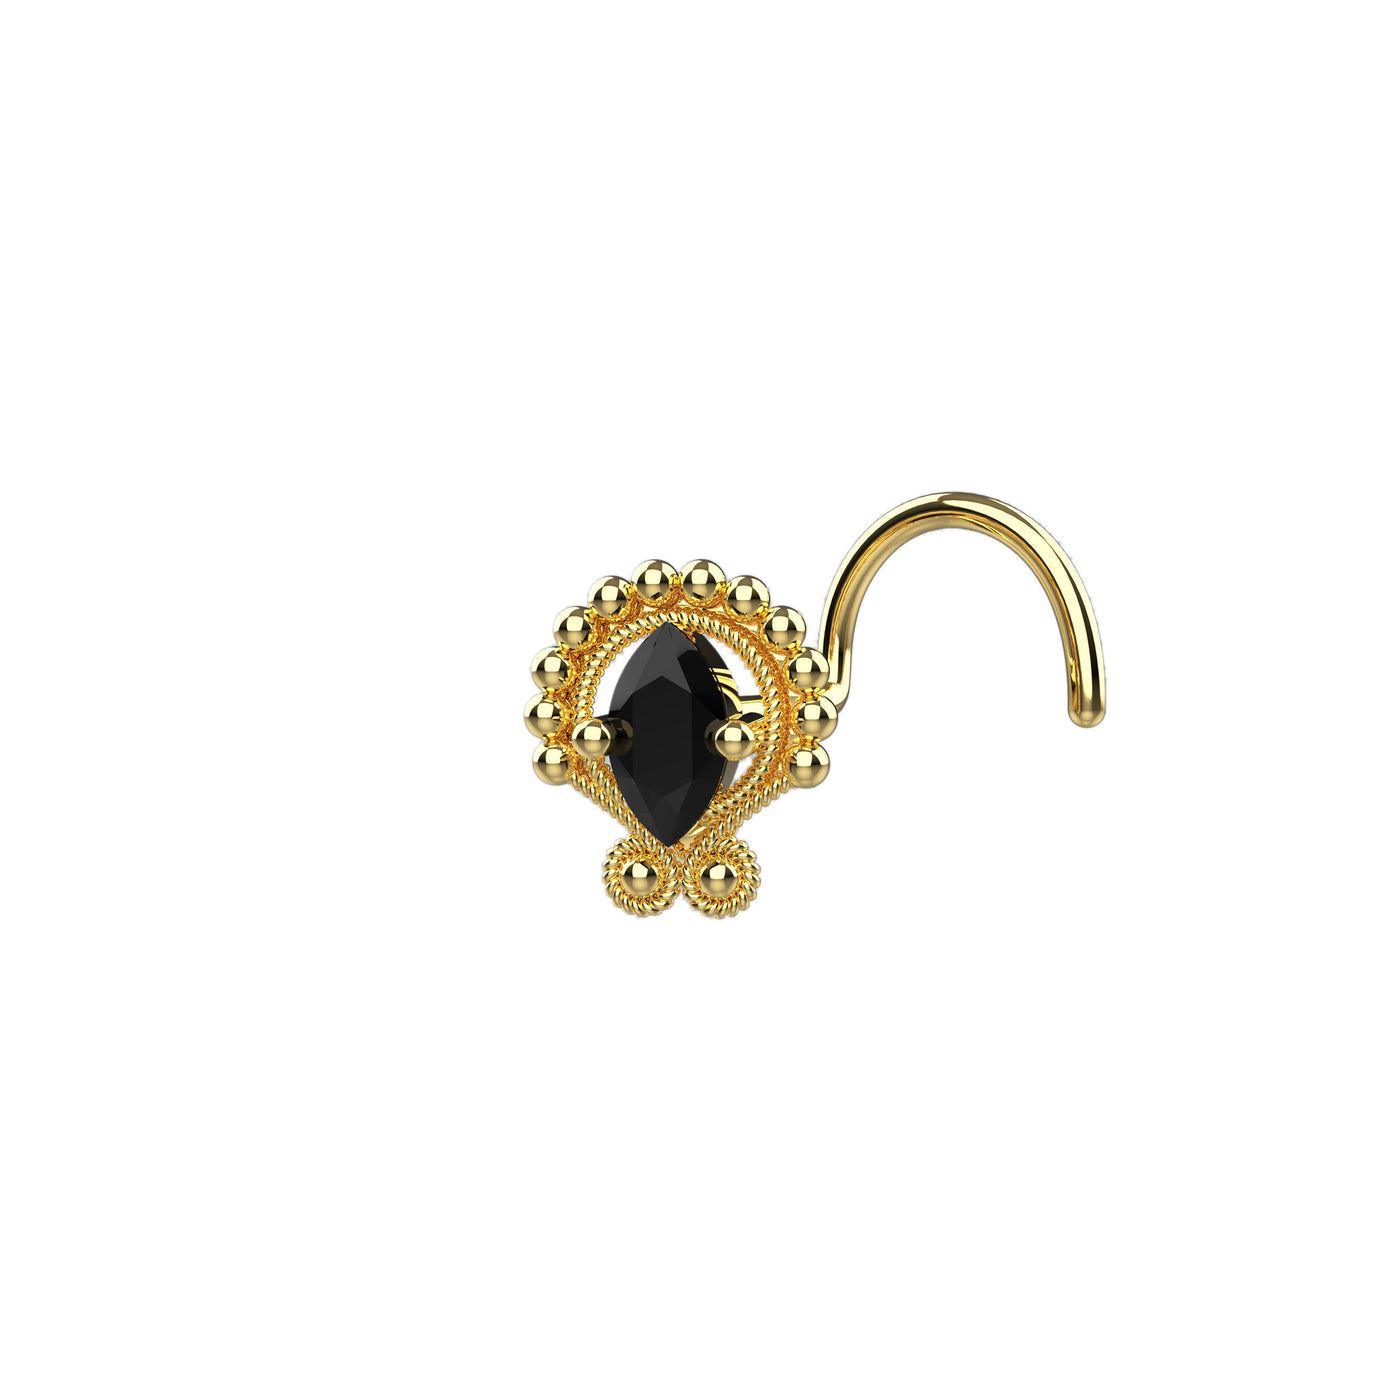 Black onyx gem nose piercing jewelry 